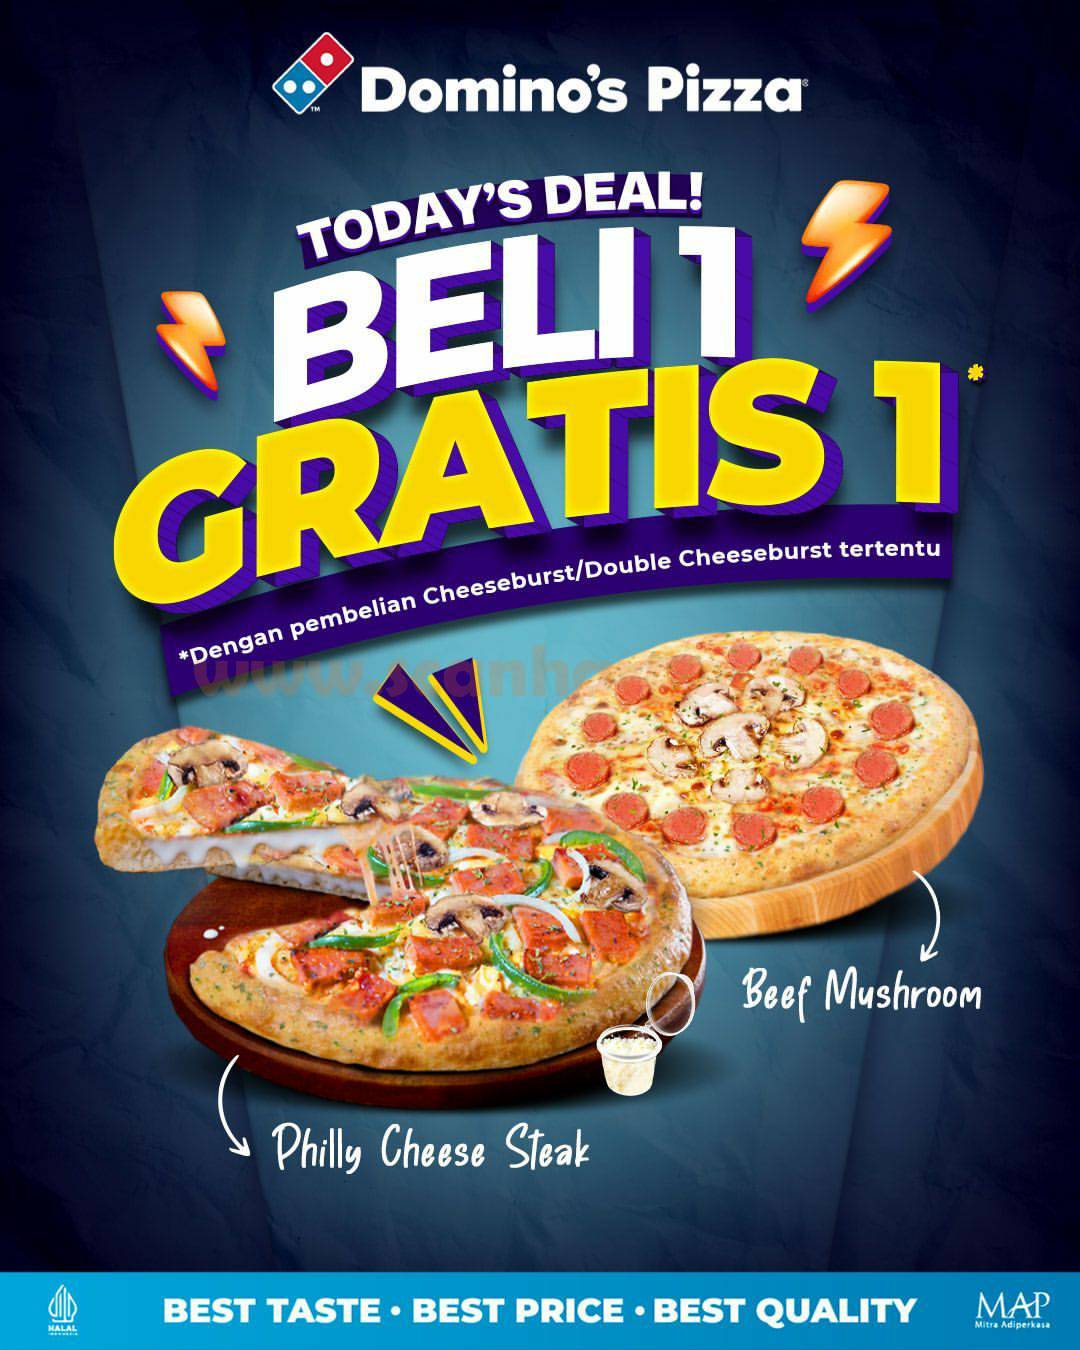 Promo Dominos Pizza Todays Deal! Beli 1 Gratis 1